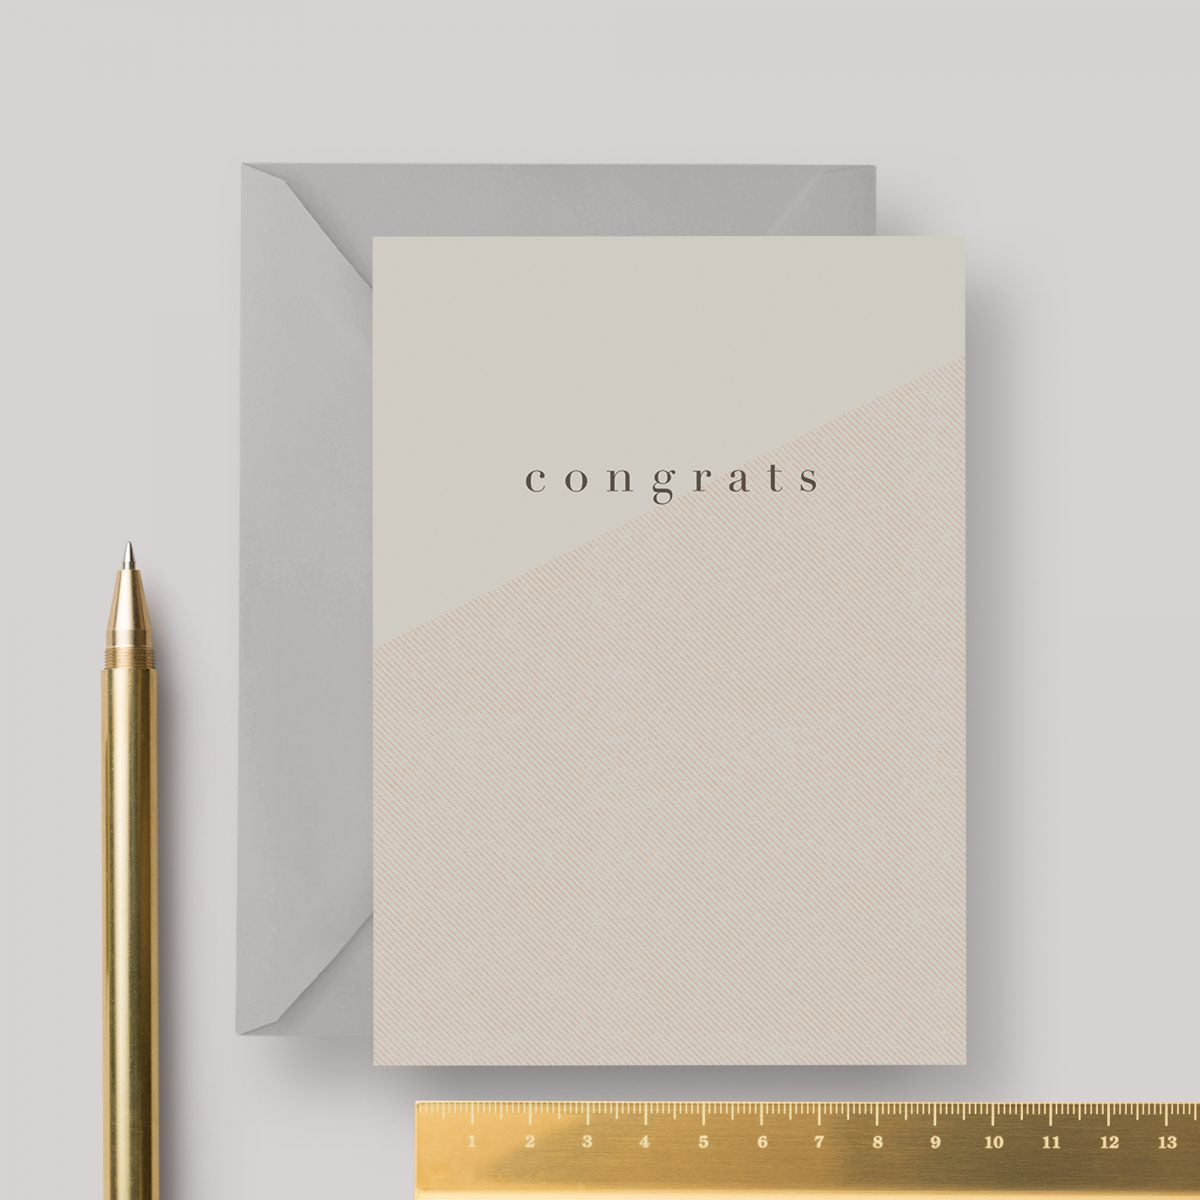 Congrats Congratulations A6 greeting card with grey envelope